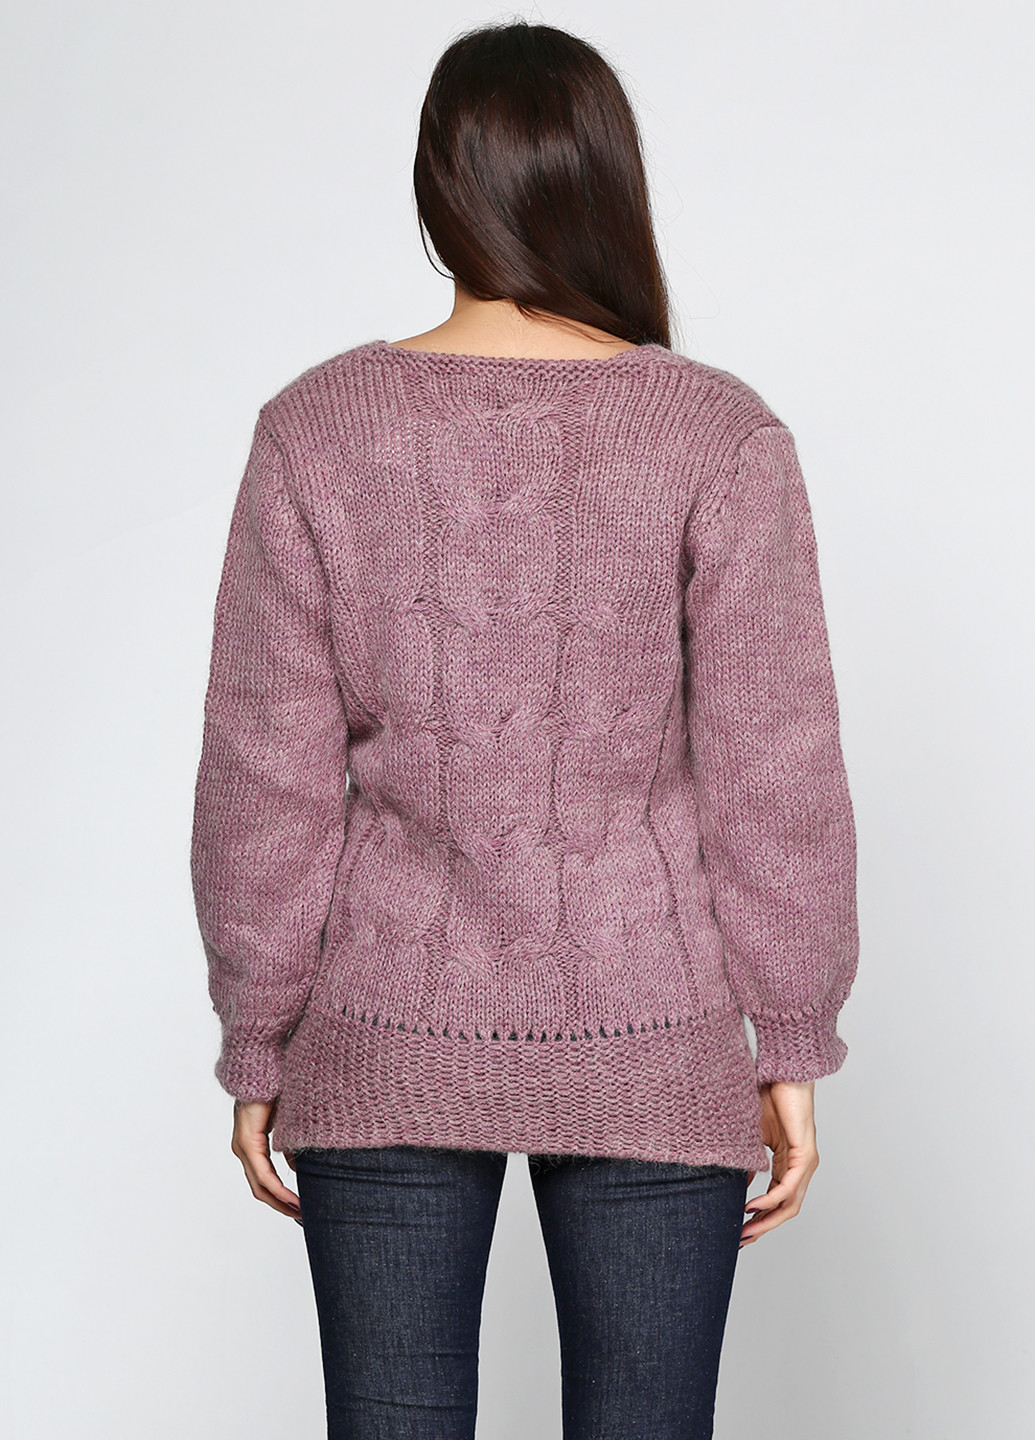 Ягодный зимний пуловер пуловер Chiara & Sara